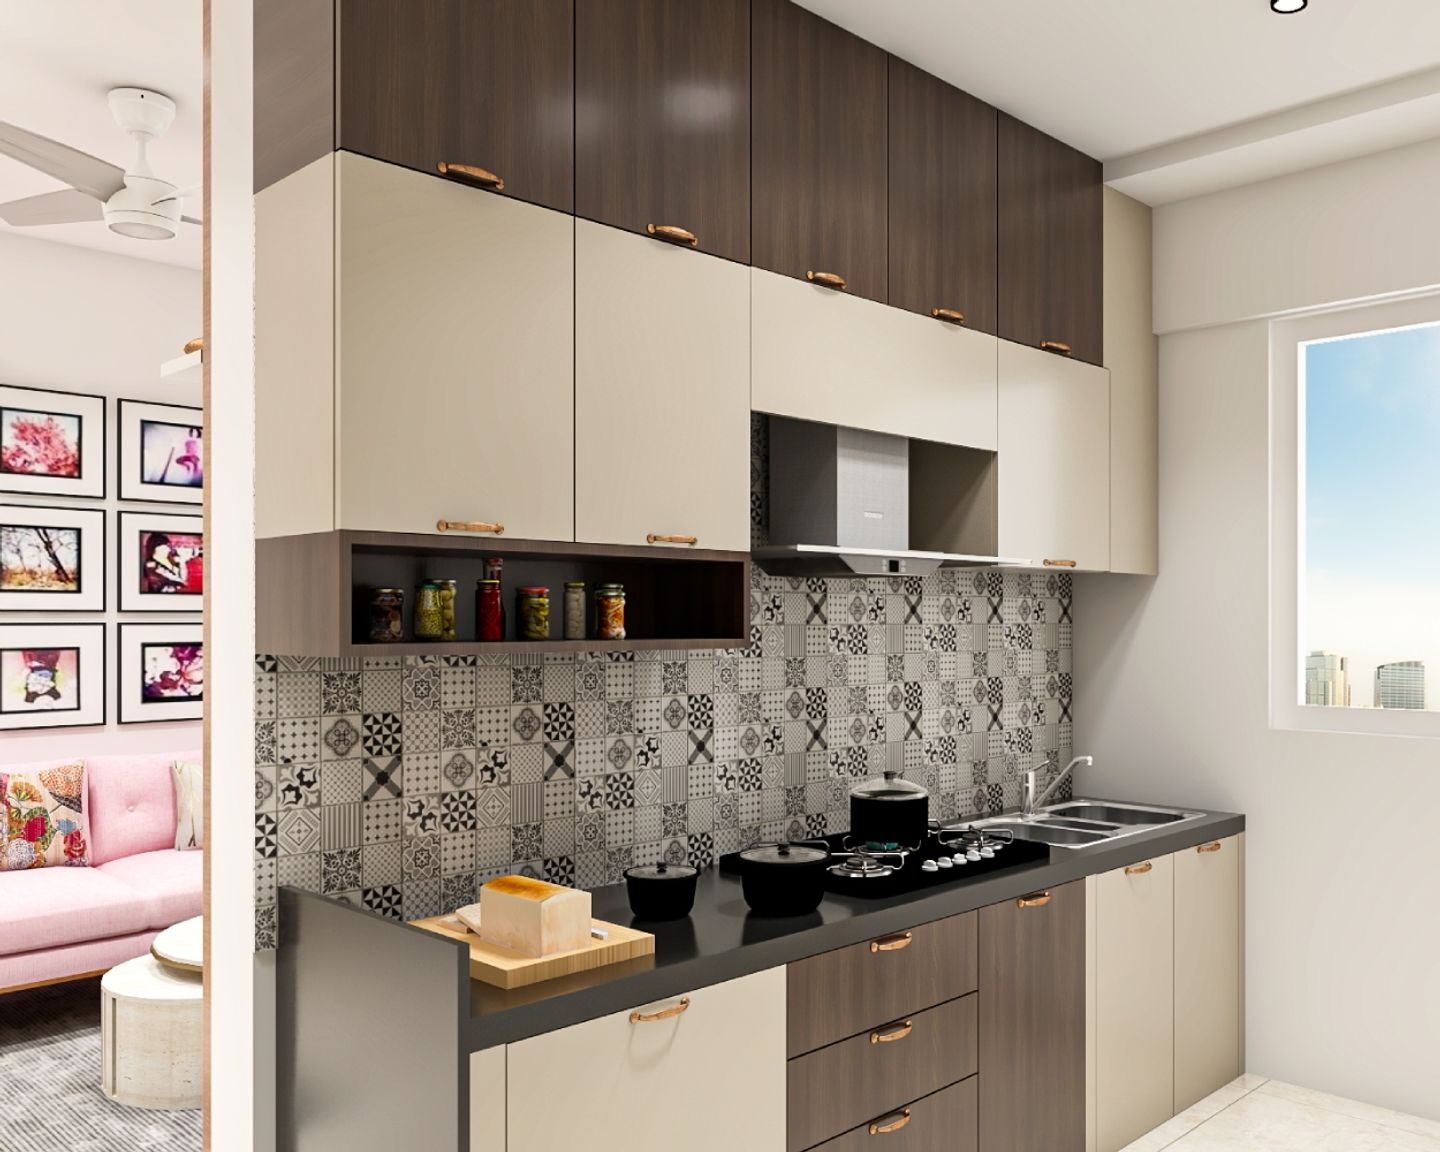 Modular Parallel Kitchen Design With Black And White Dado Tiles - Livspace